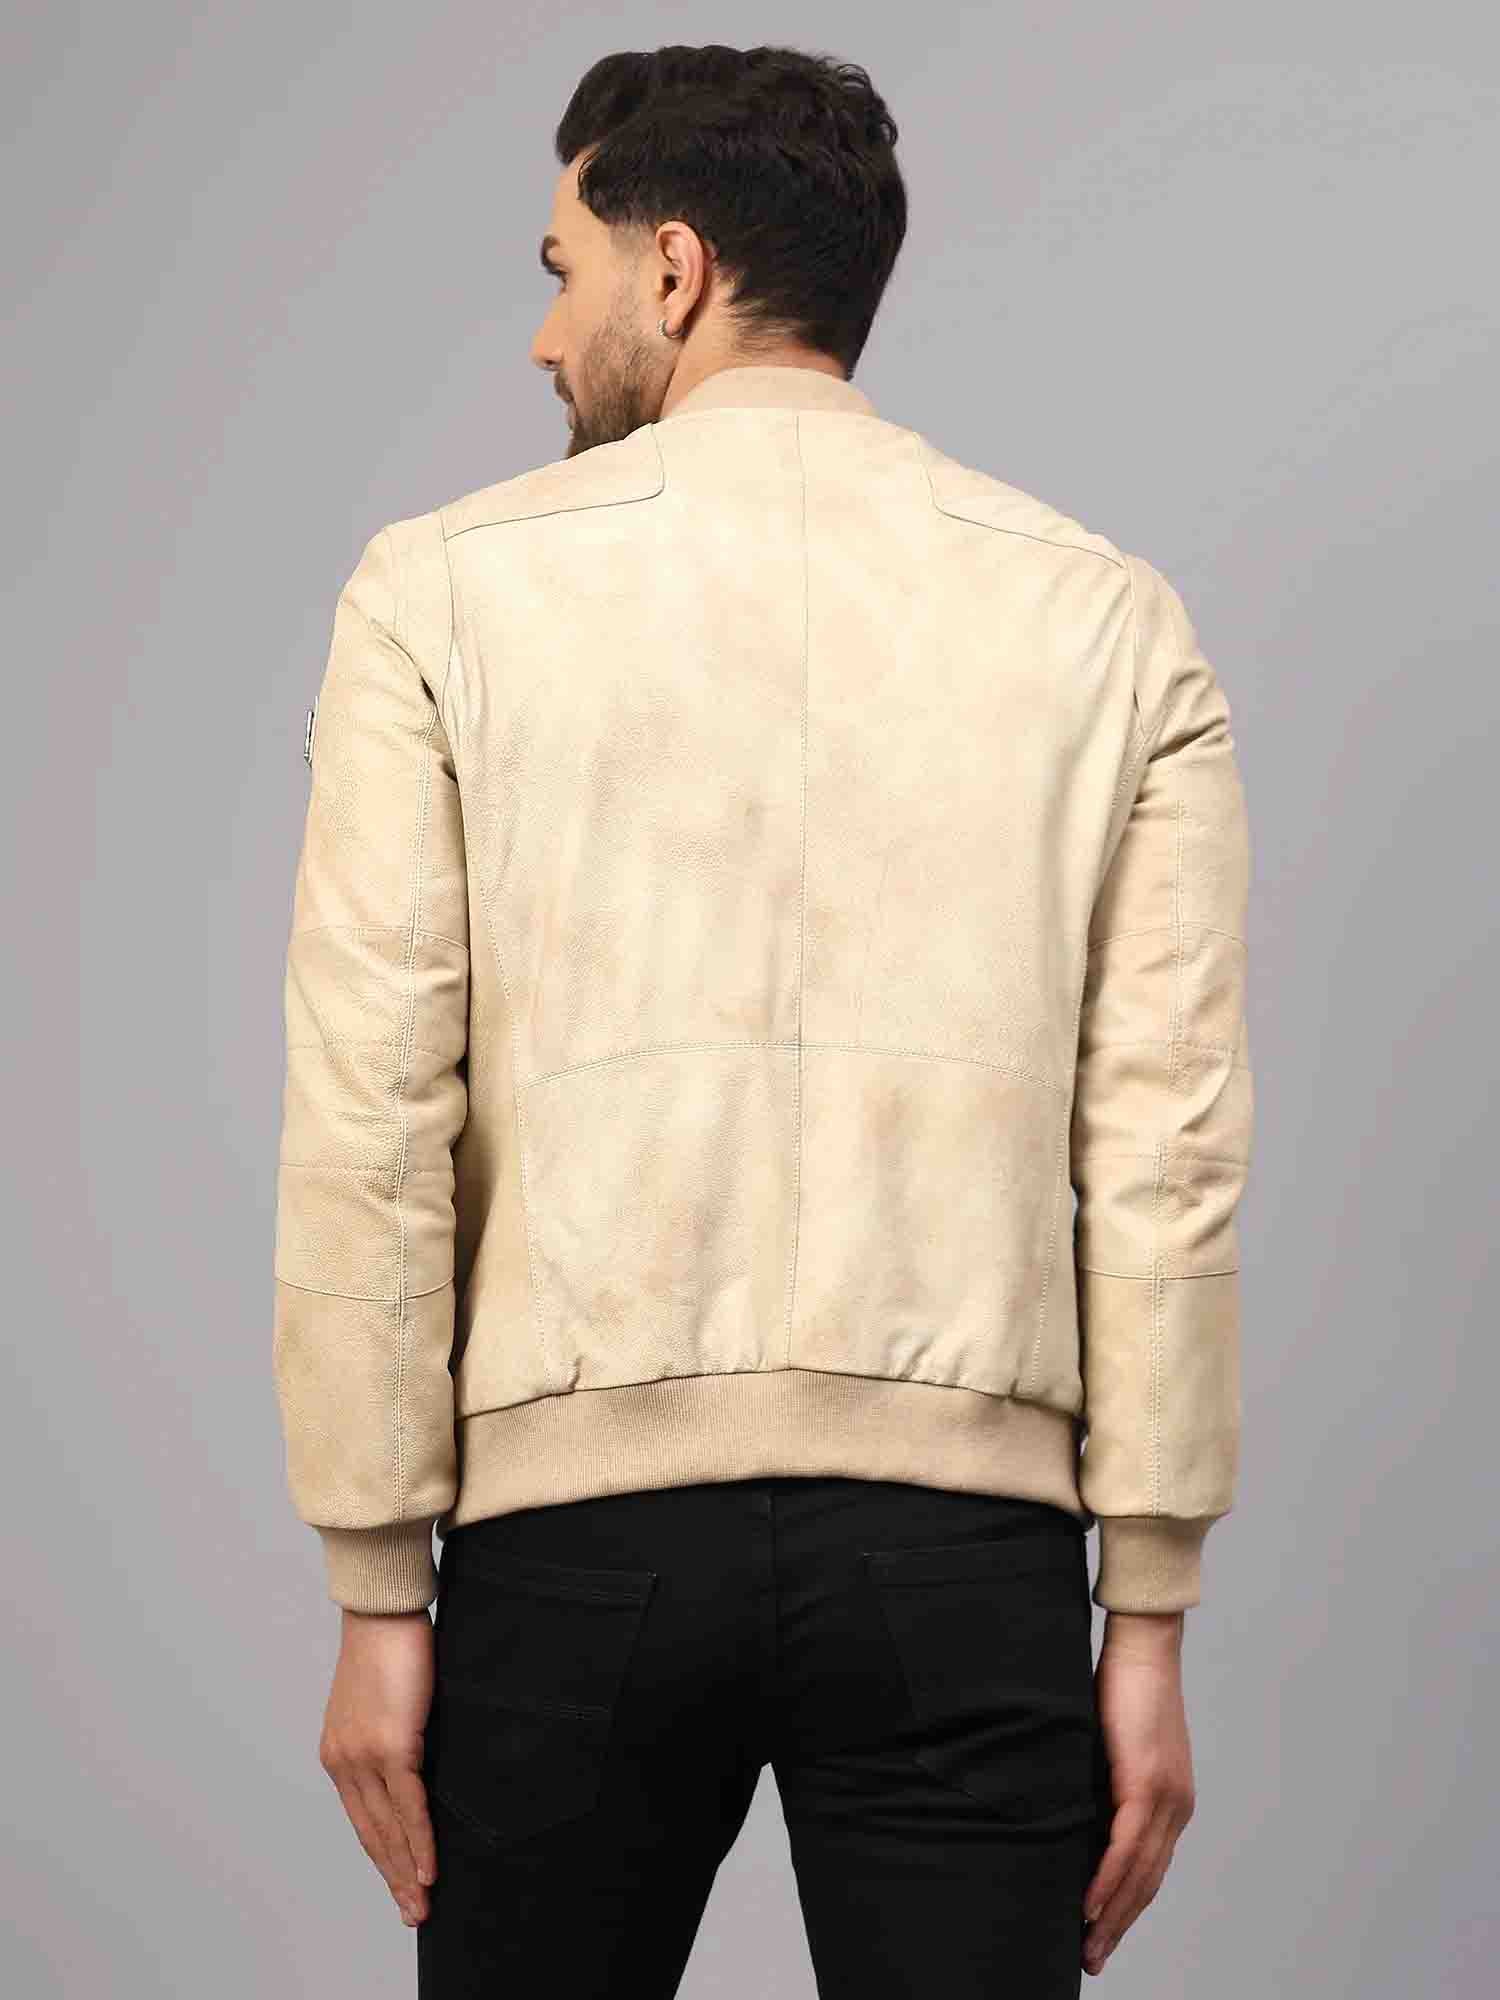 Men's Camel Suede Leather Jacket | Stylish Mandarin Collar